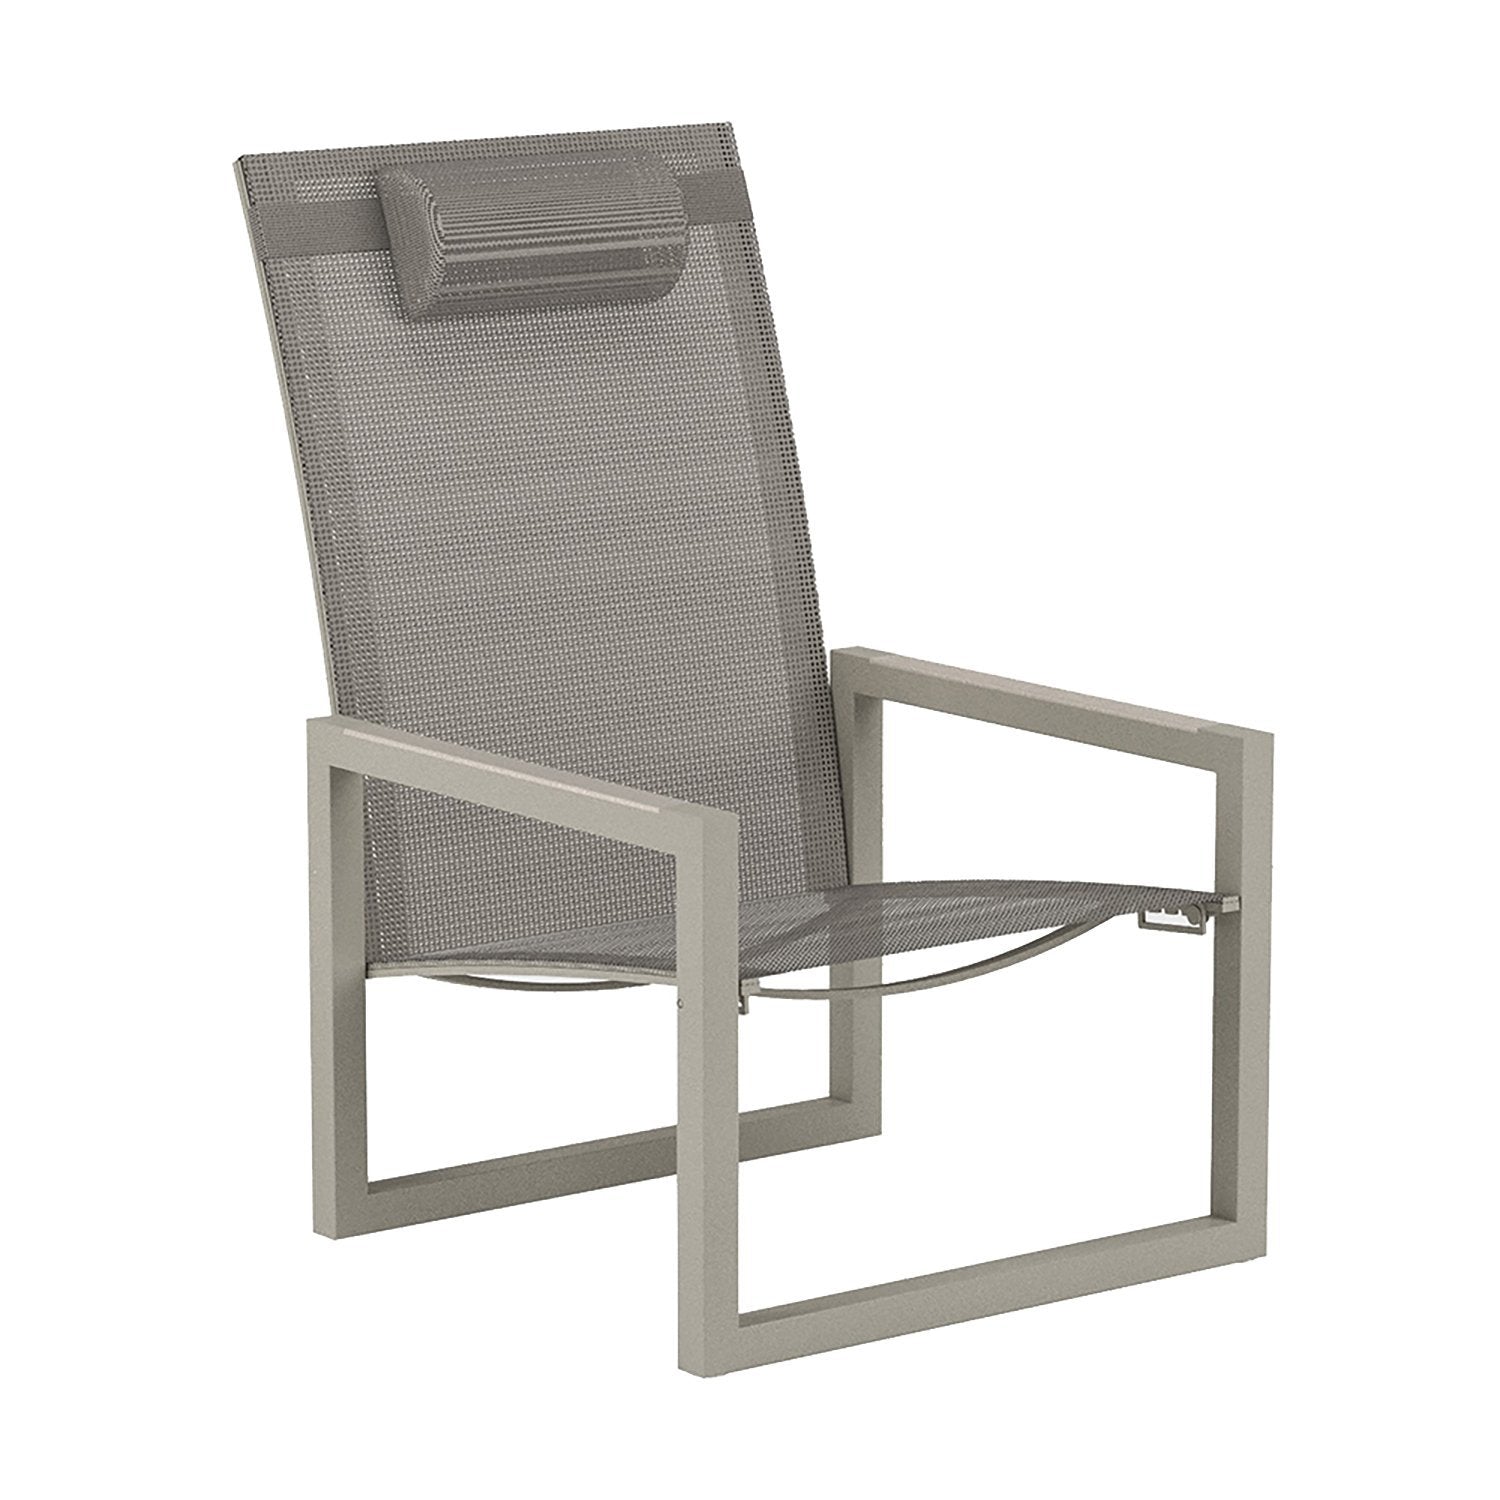 Ninix 60 Powder-coated Relax Chair